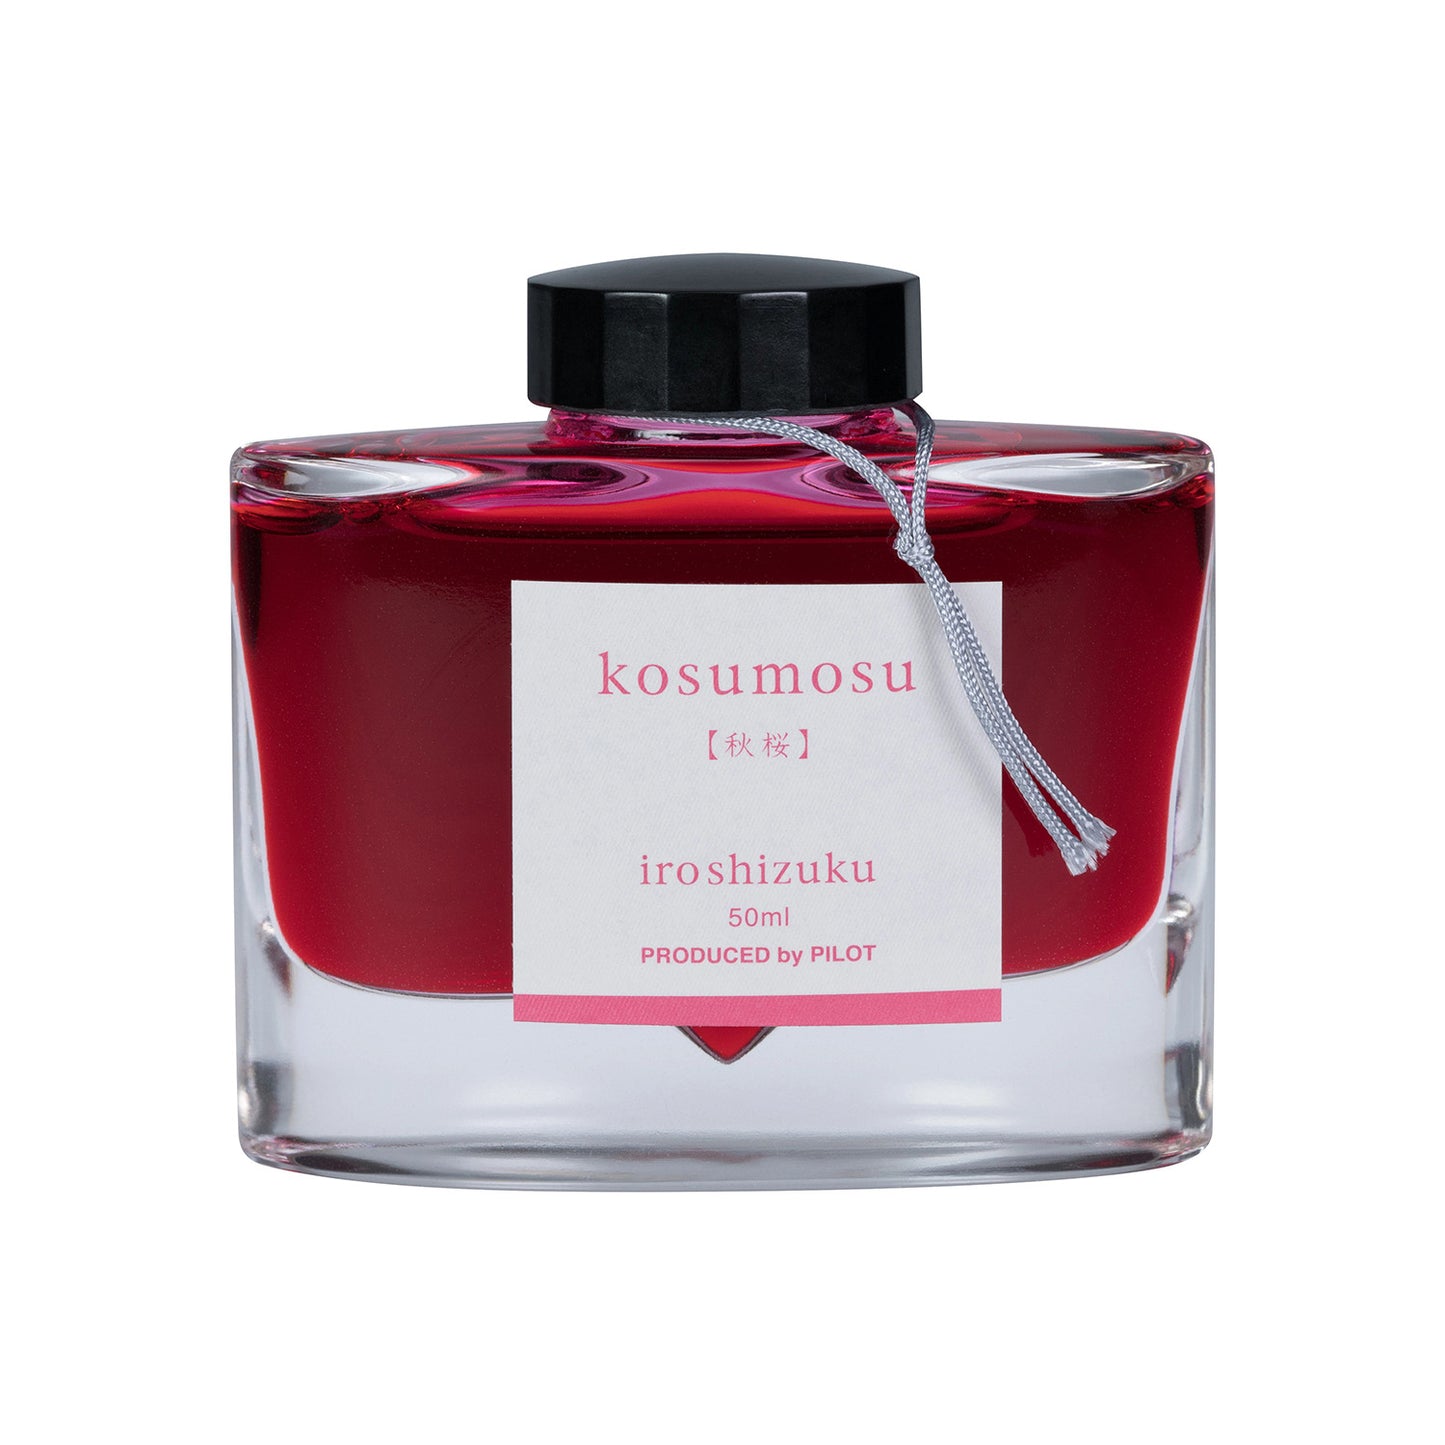 Pilot Iroshizuku Fountain Pen Ink - Kosumosu (Cosmos) - 50 ml Bottle pink